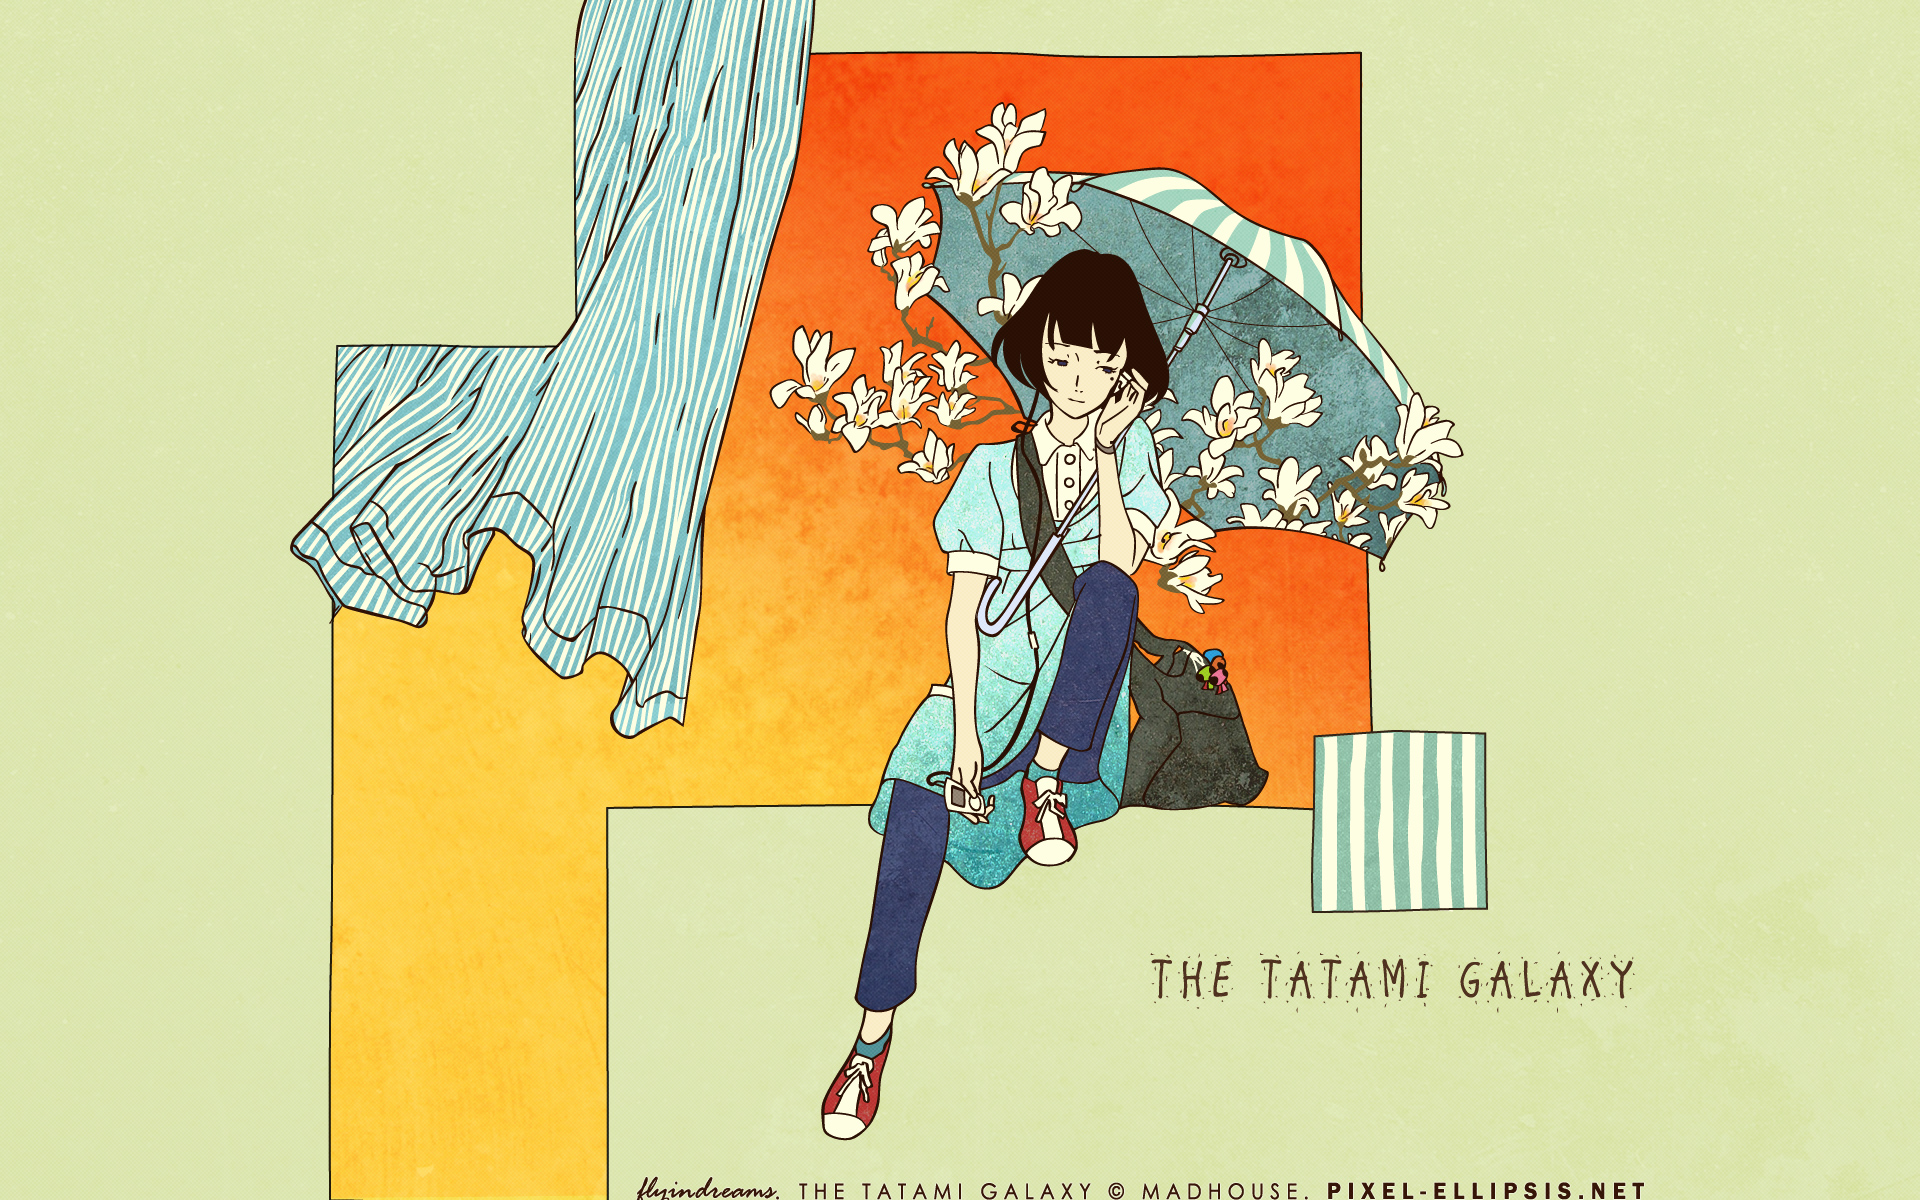 The Tatami Galaxy #4